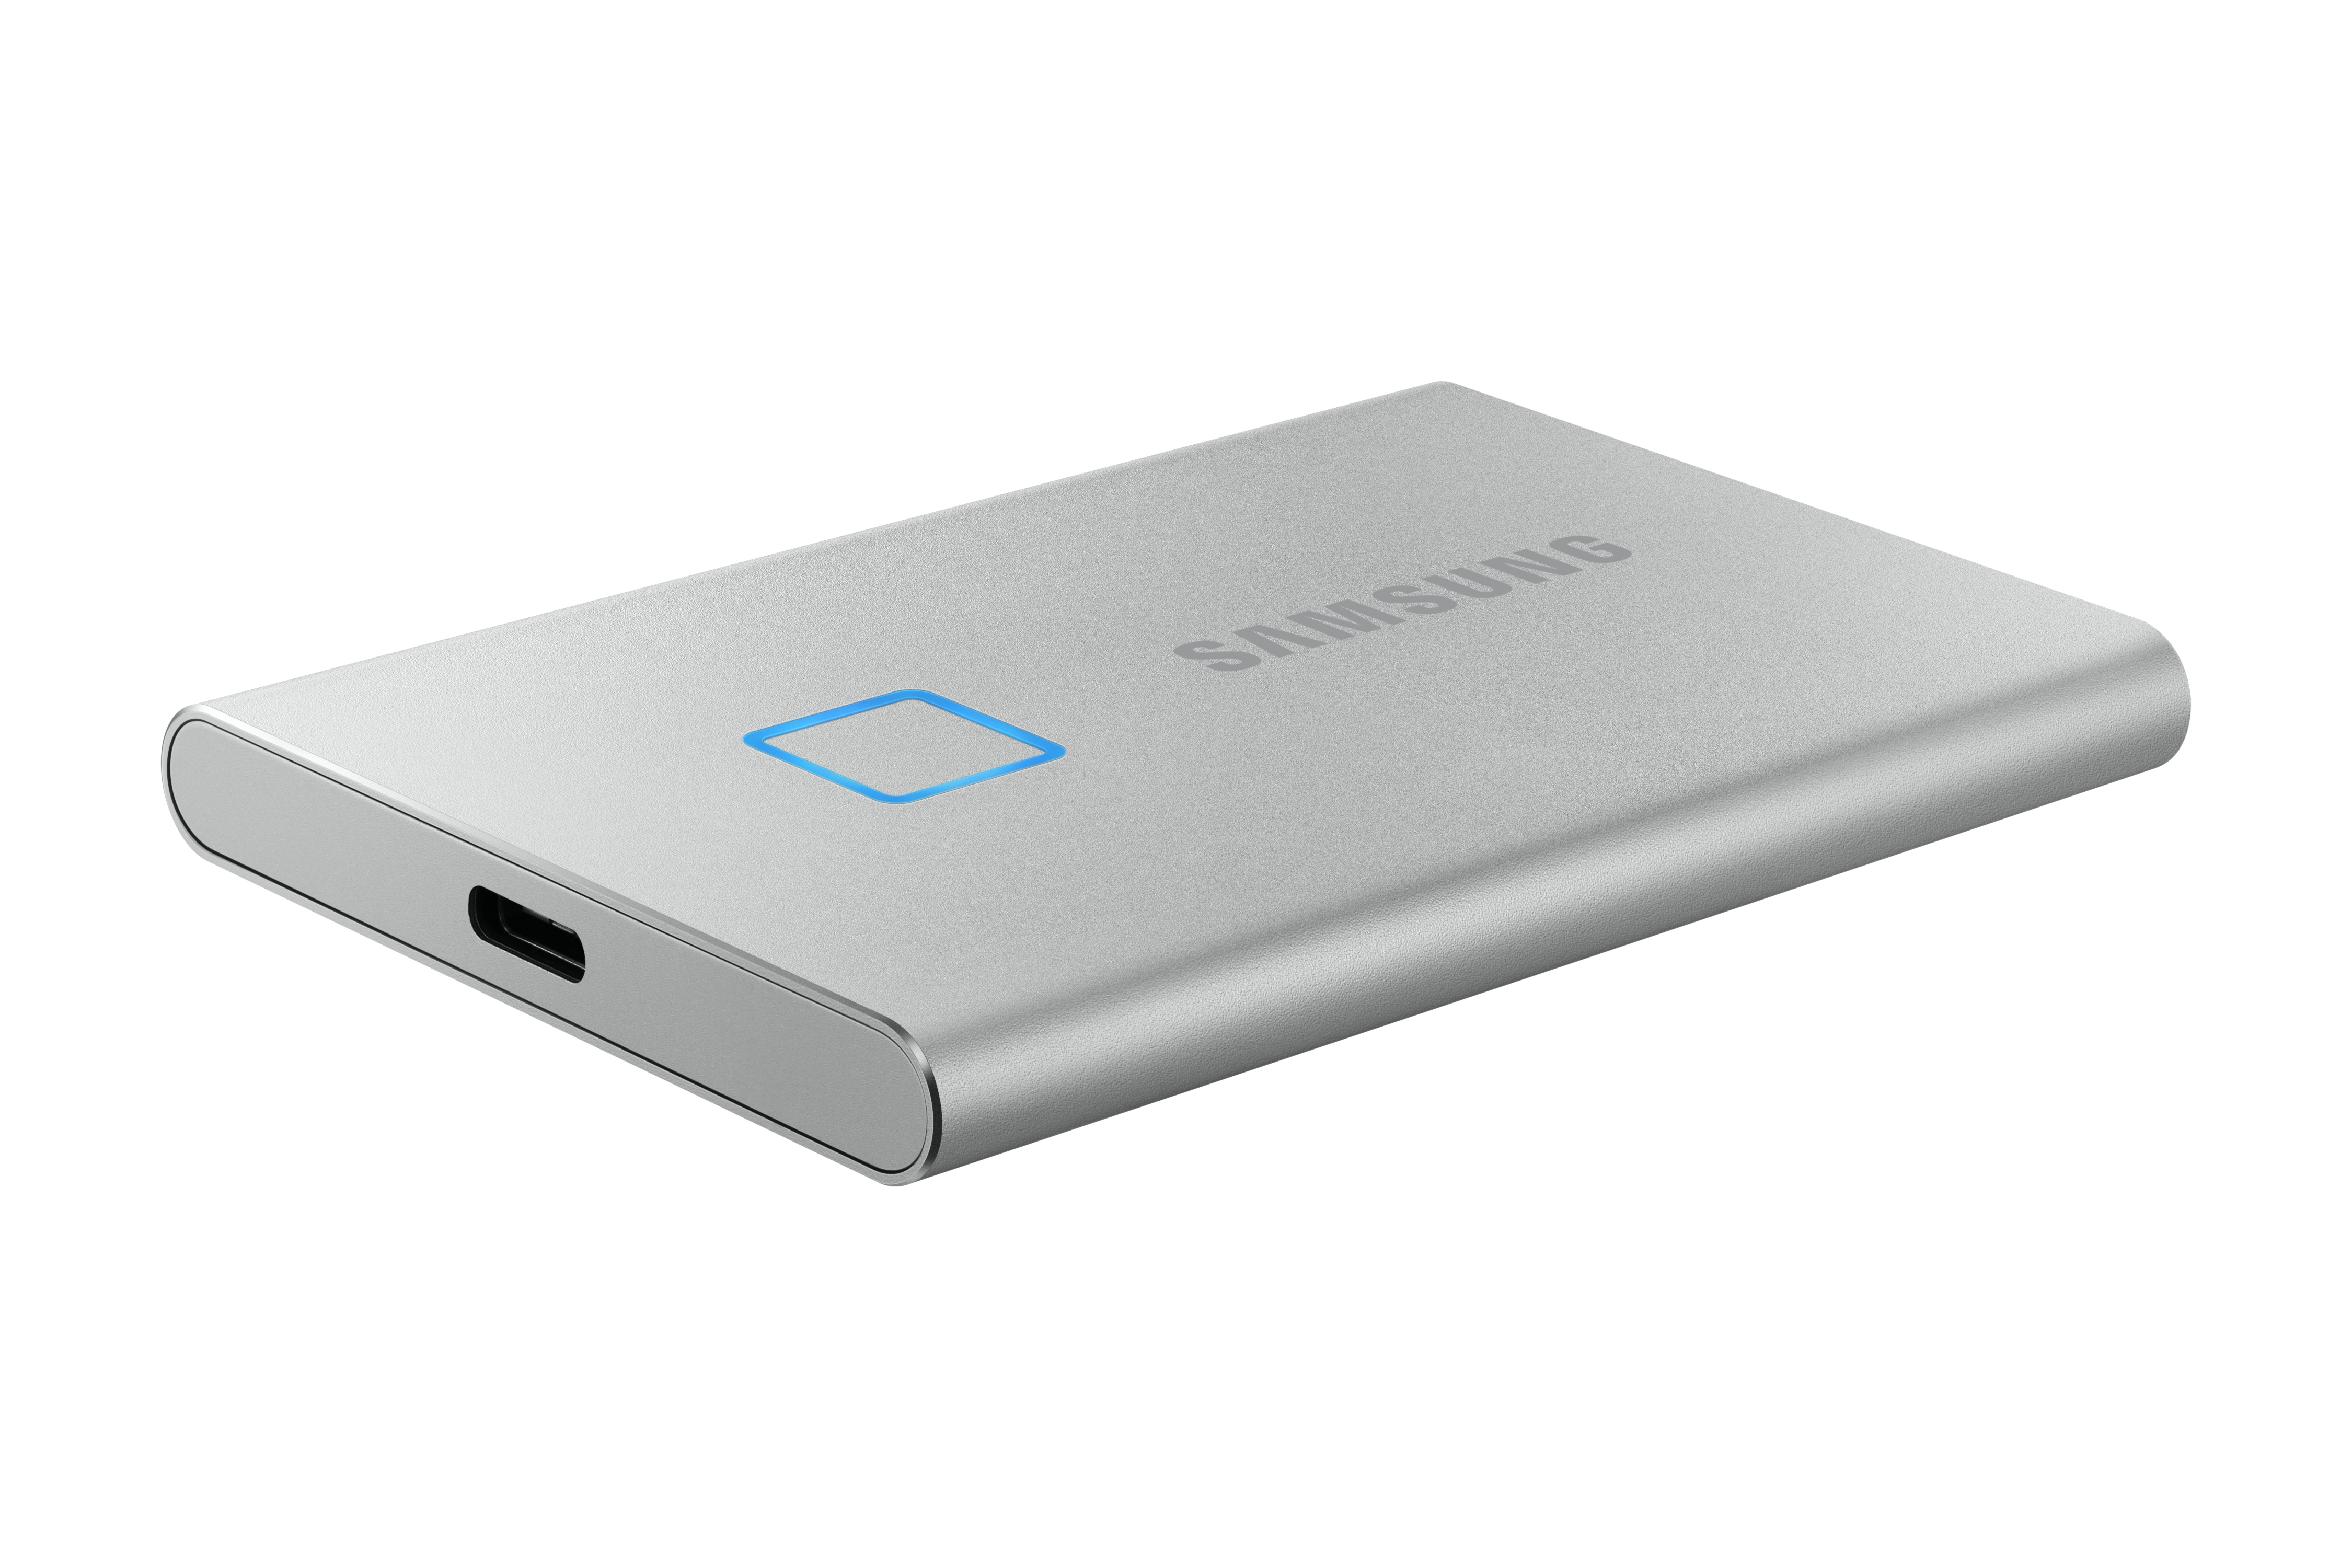 SAMSUNG T7 Portable SSD 500GB Metallic Red, Up-to 1,050MB/s, USB 3.2 Gen2  (MU-PC500R/AM) 